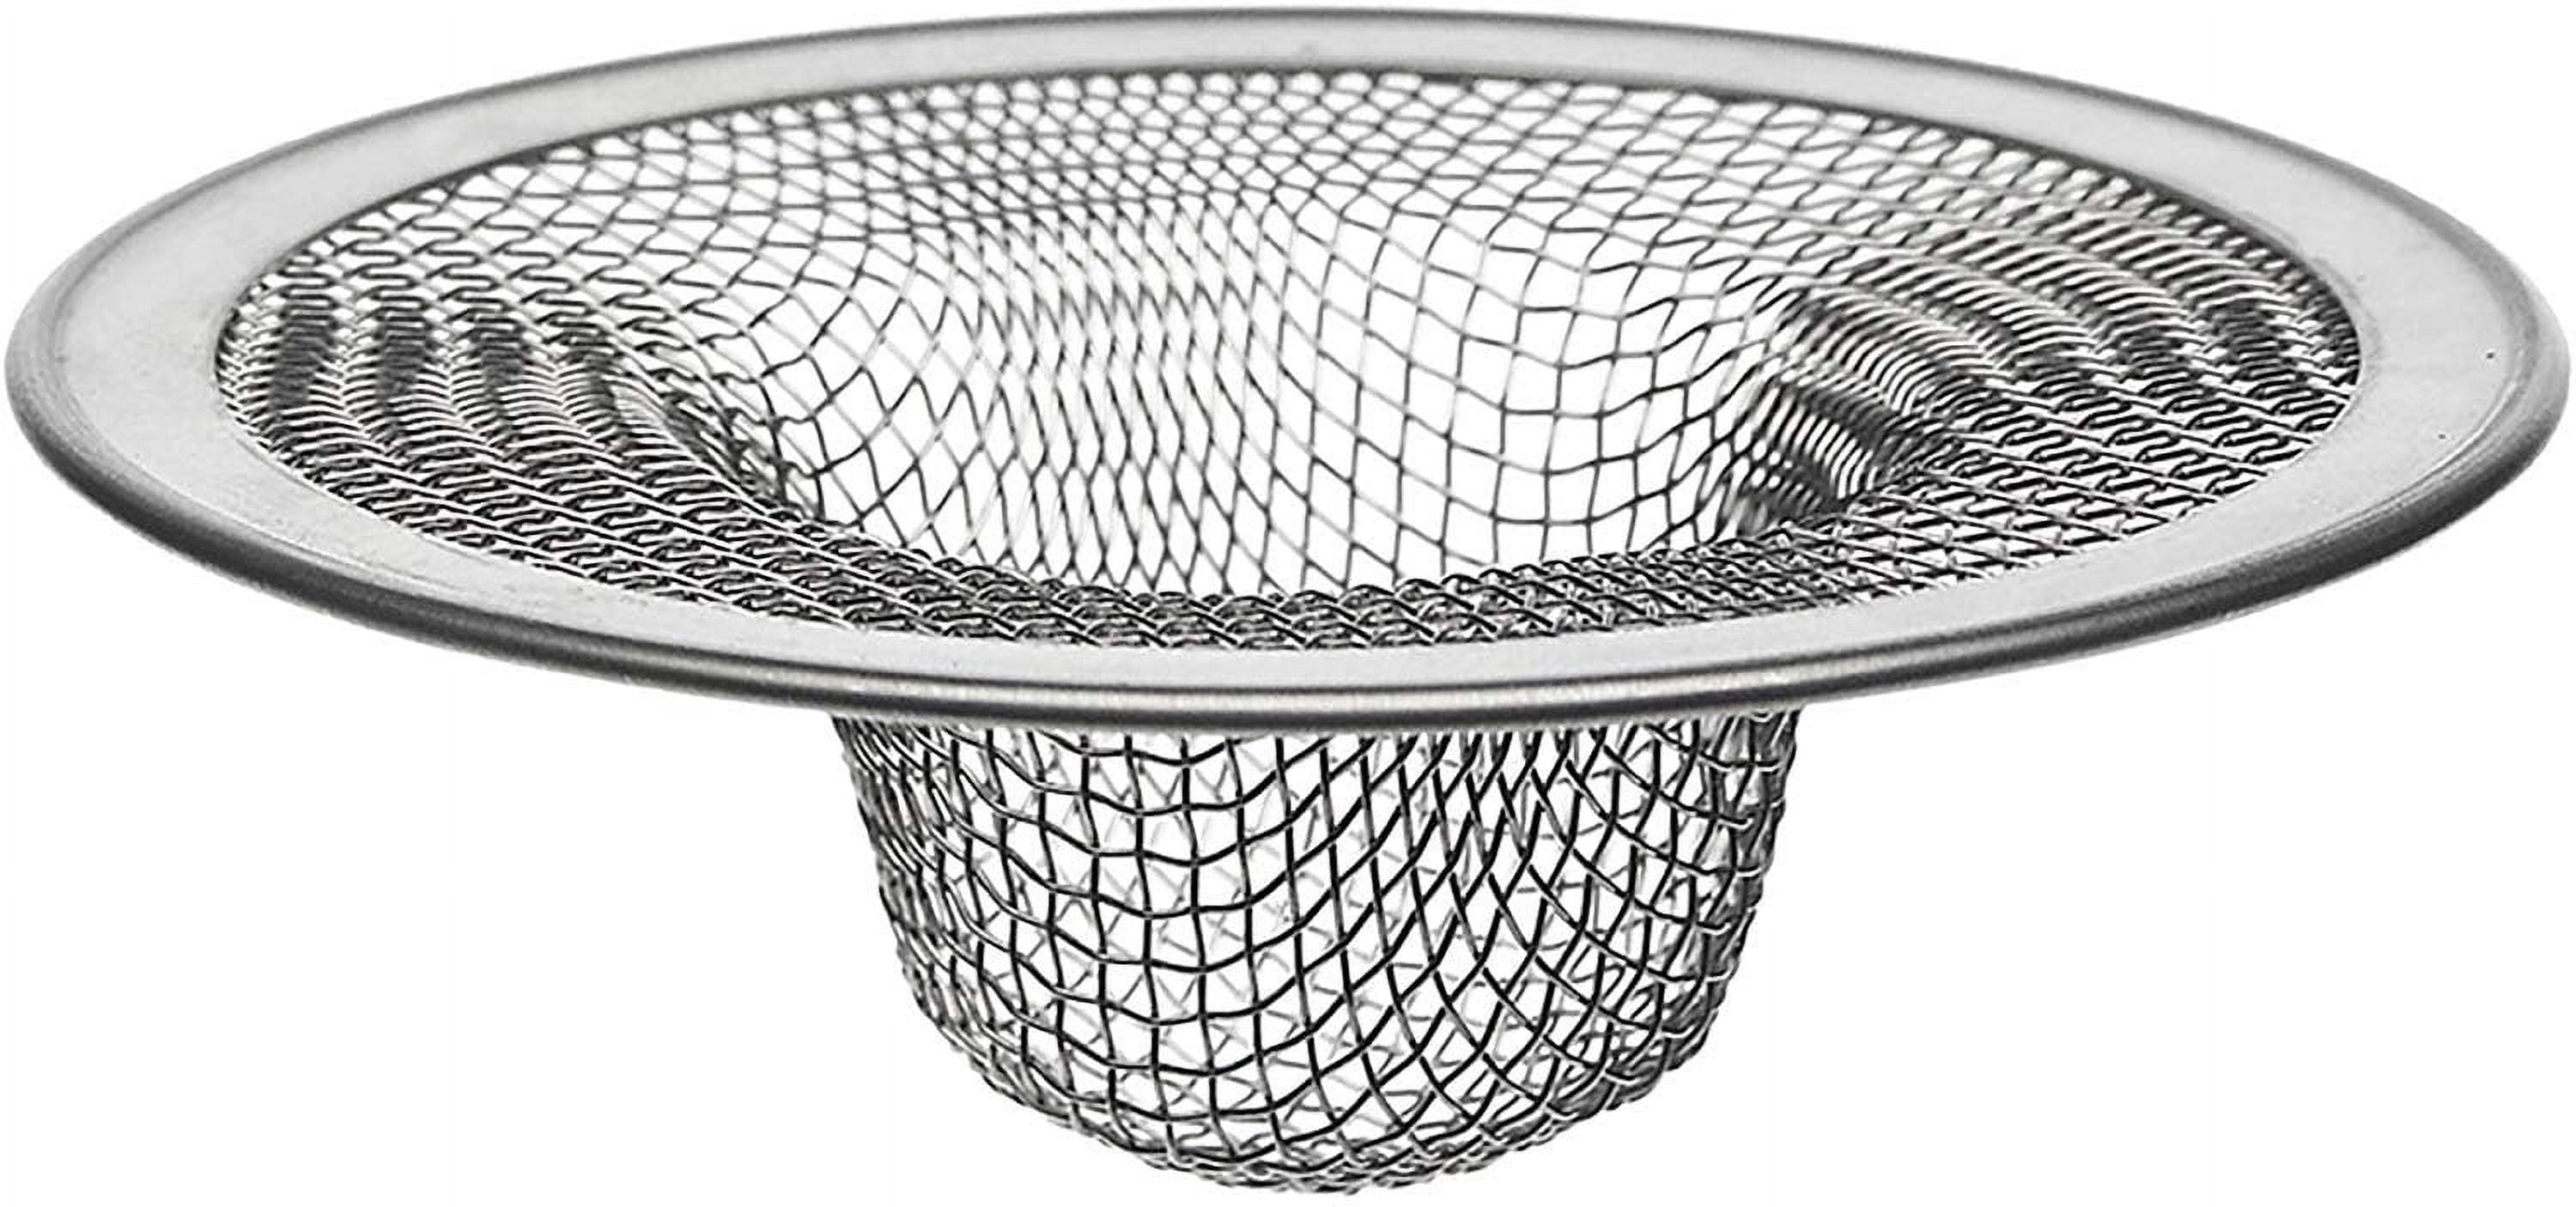 Thrifco 4402359 3-1/2 Inch Universal Bath Tub Stainless Steel Mesh Strainer  